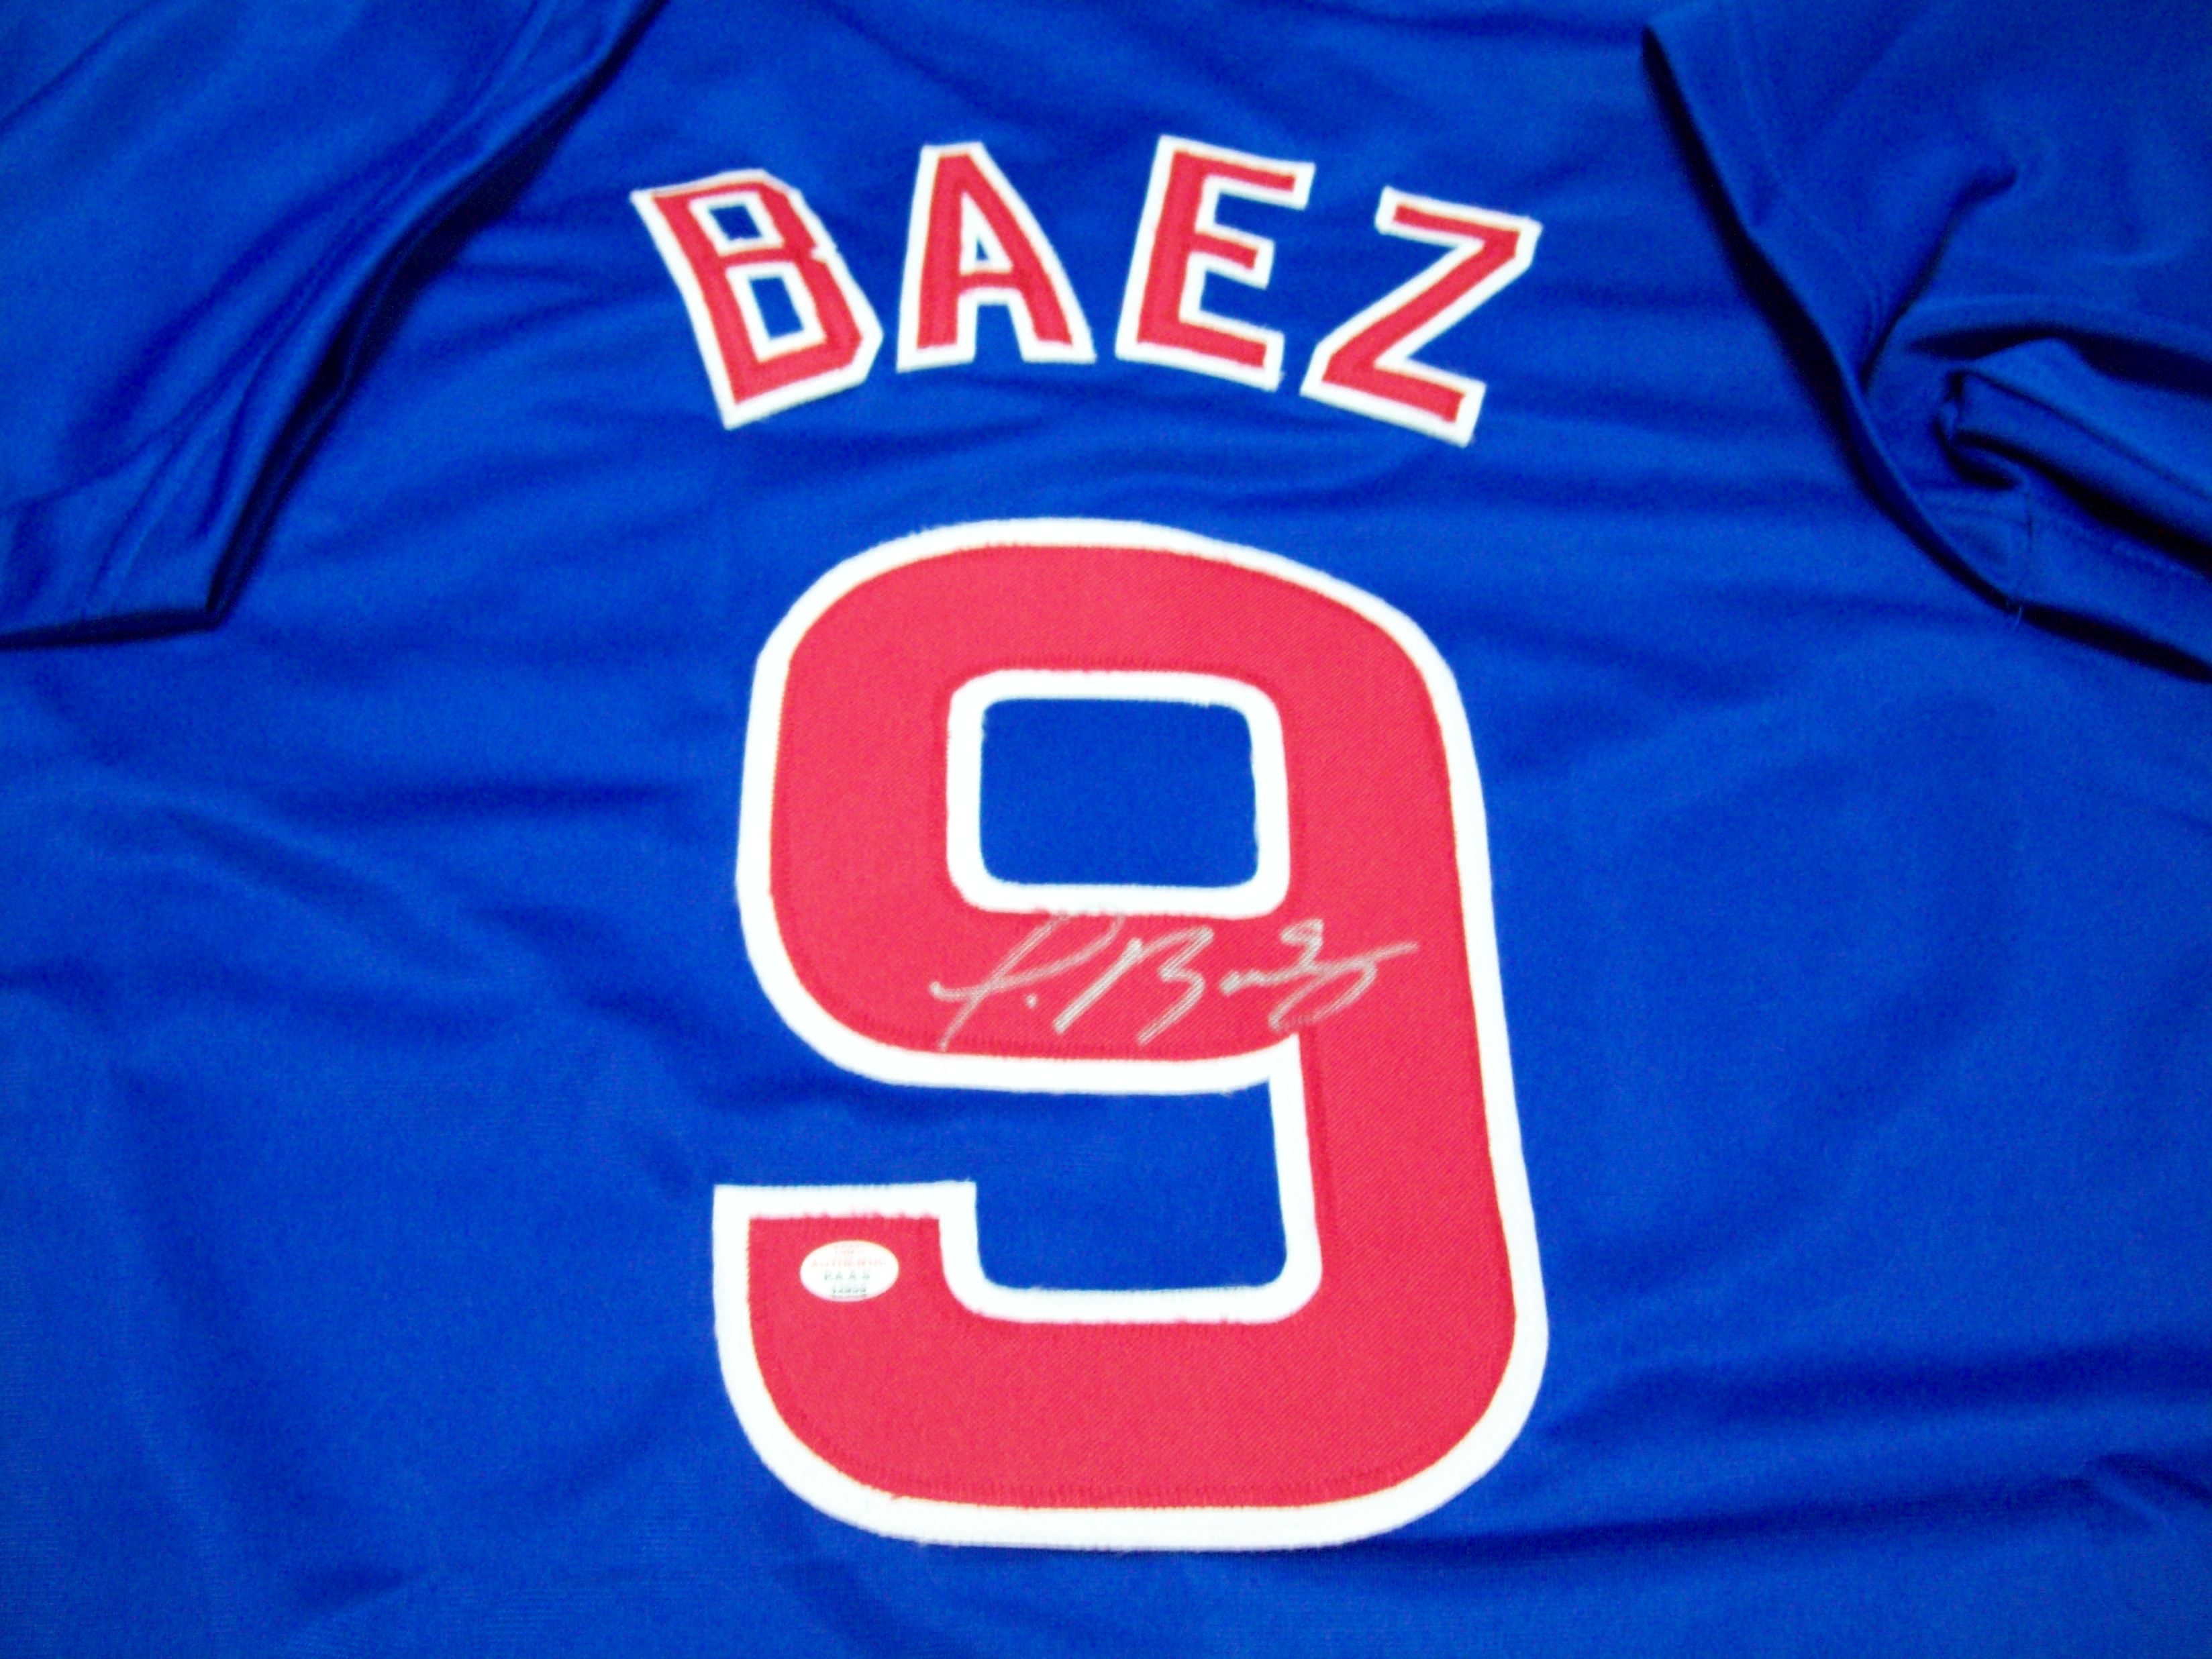 Javier Baez Signed Autographed Jersey Chicago Cubs MLB